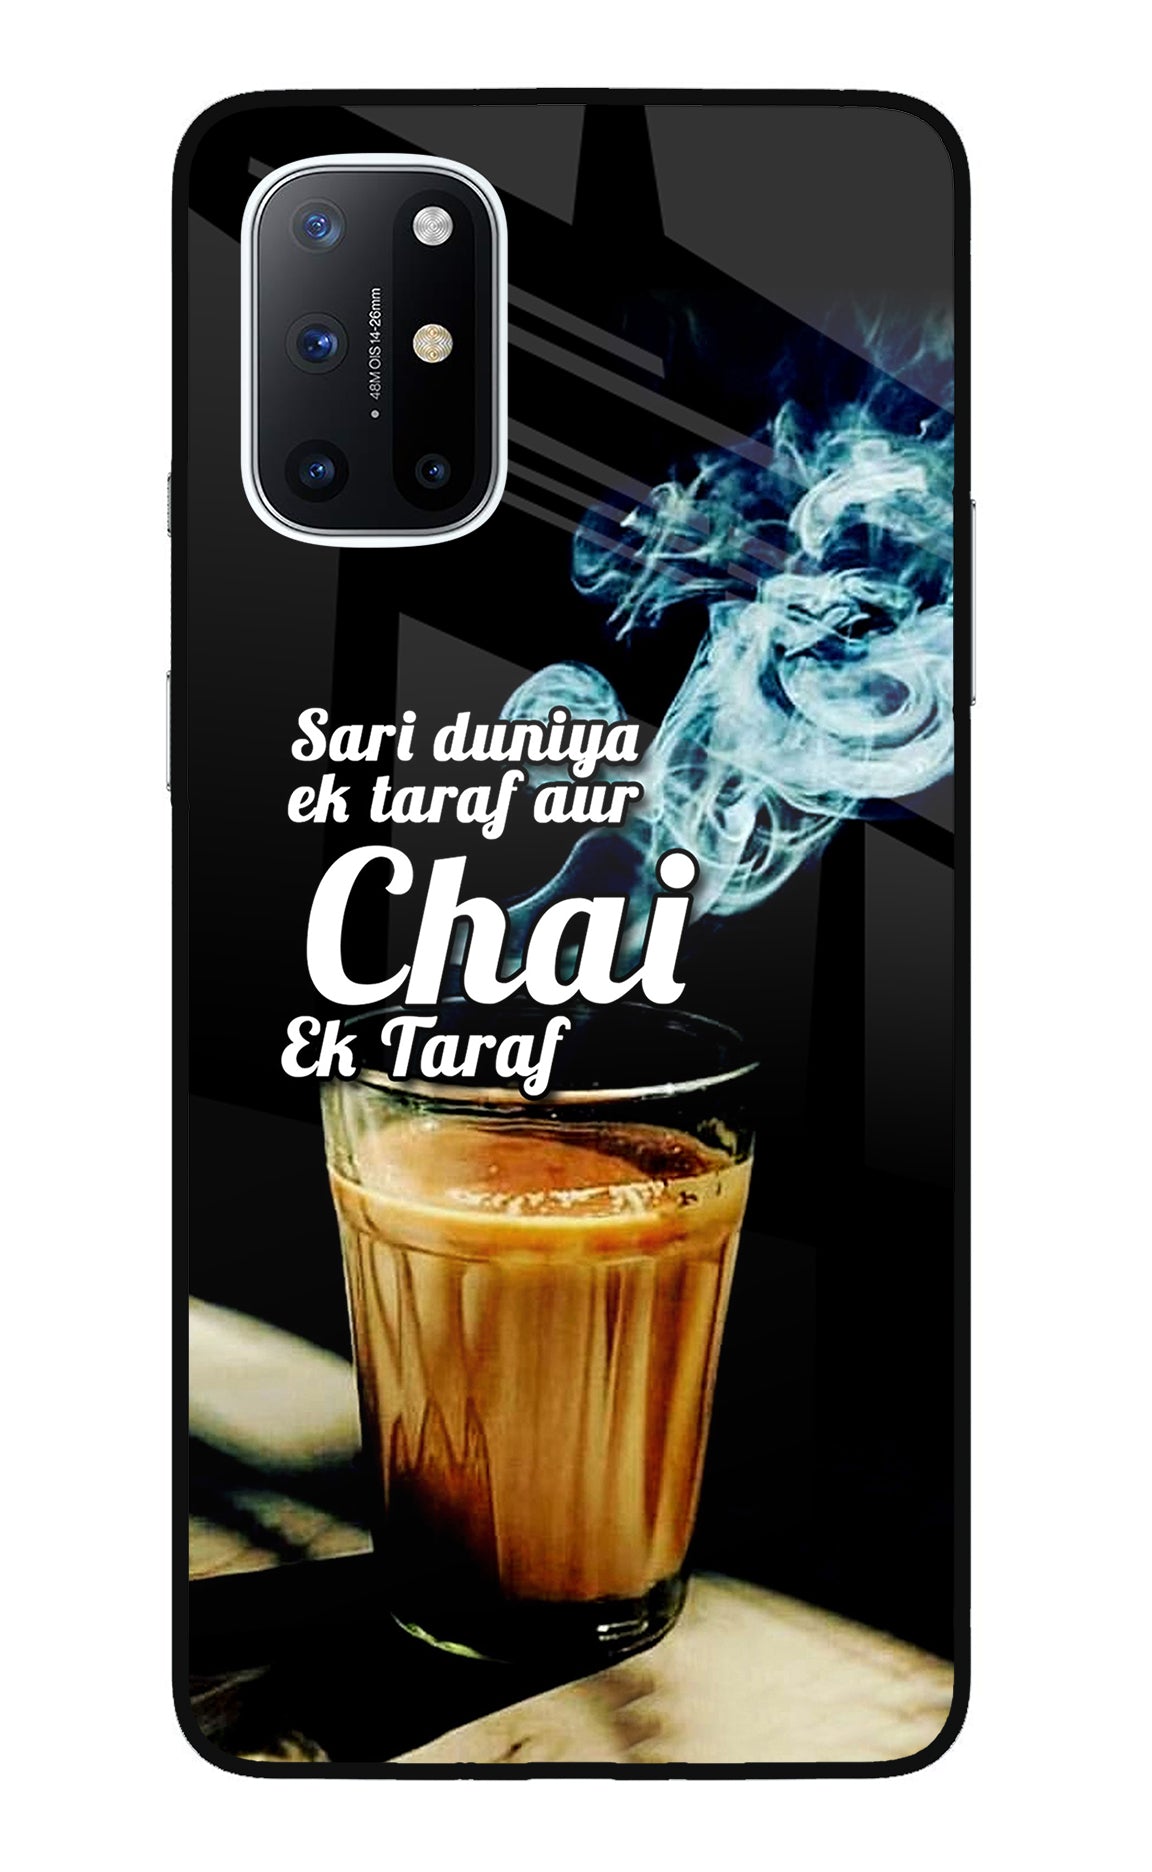 Chai Ek Taraf Quote Oneplus 8T Glass Case